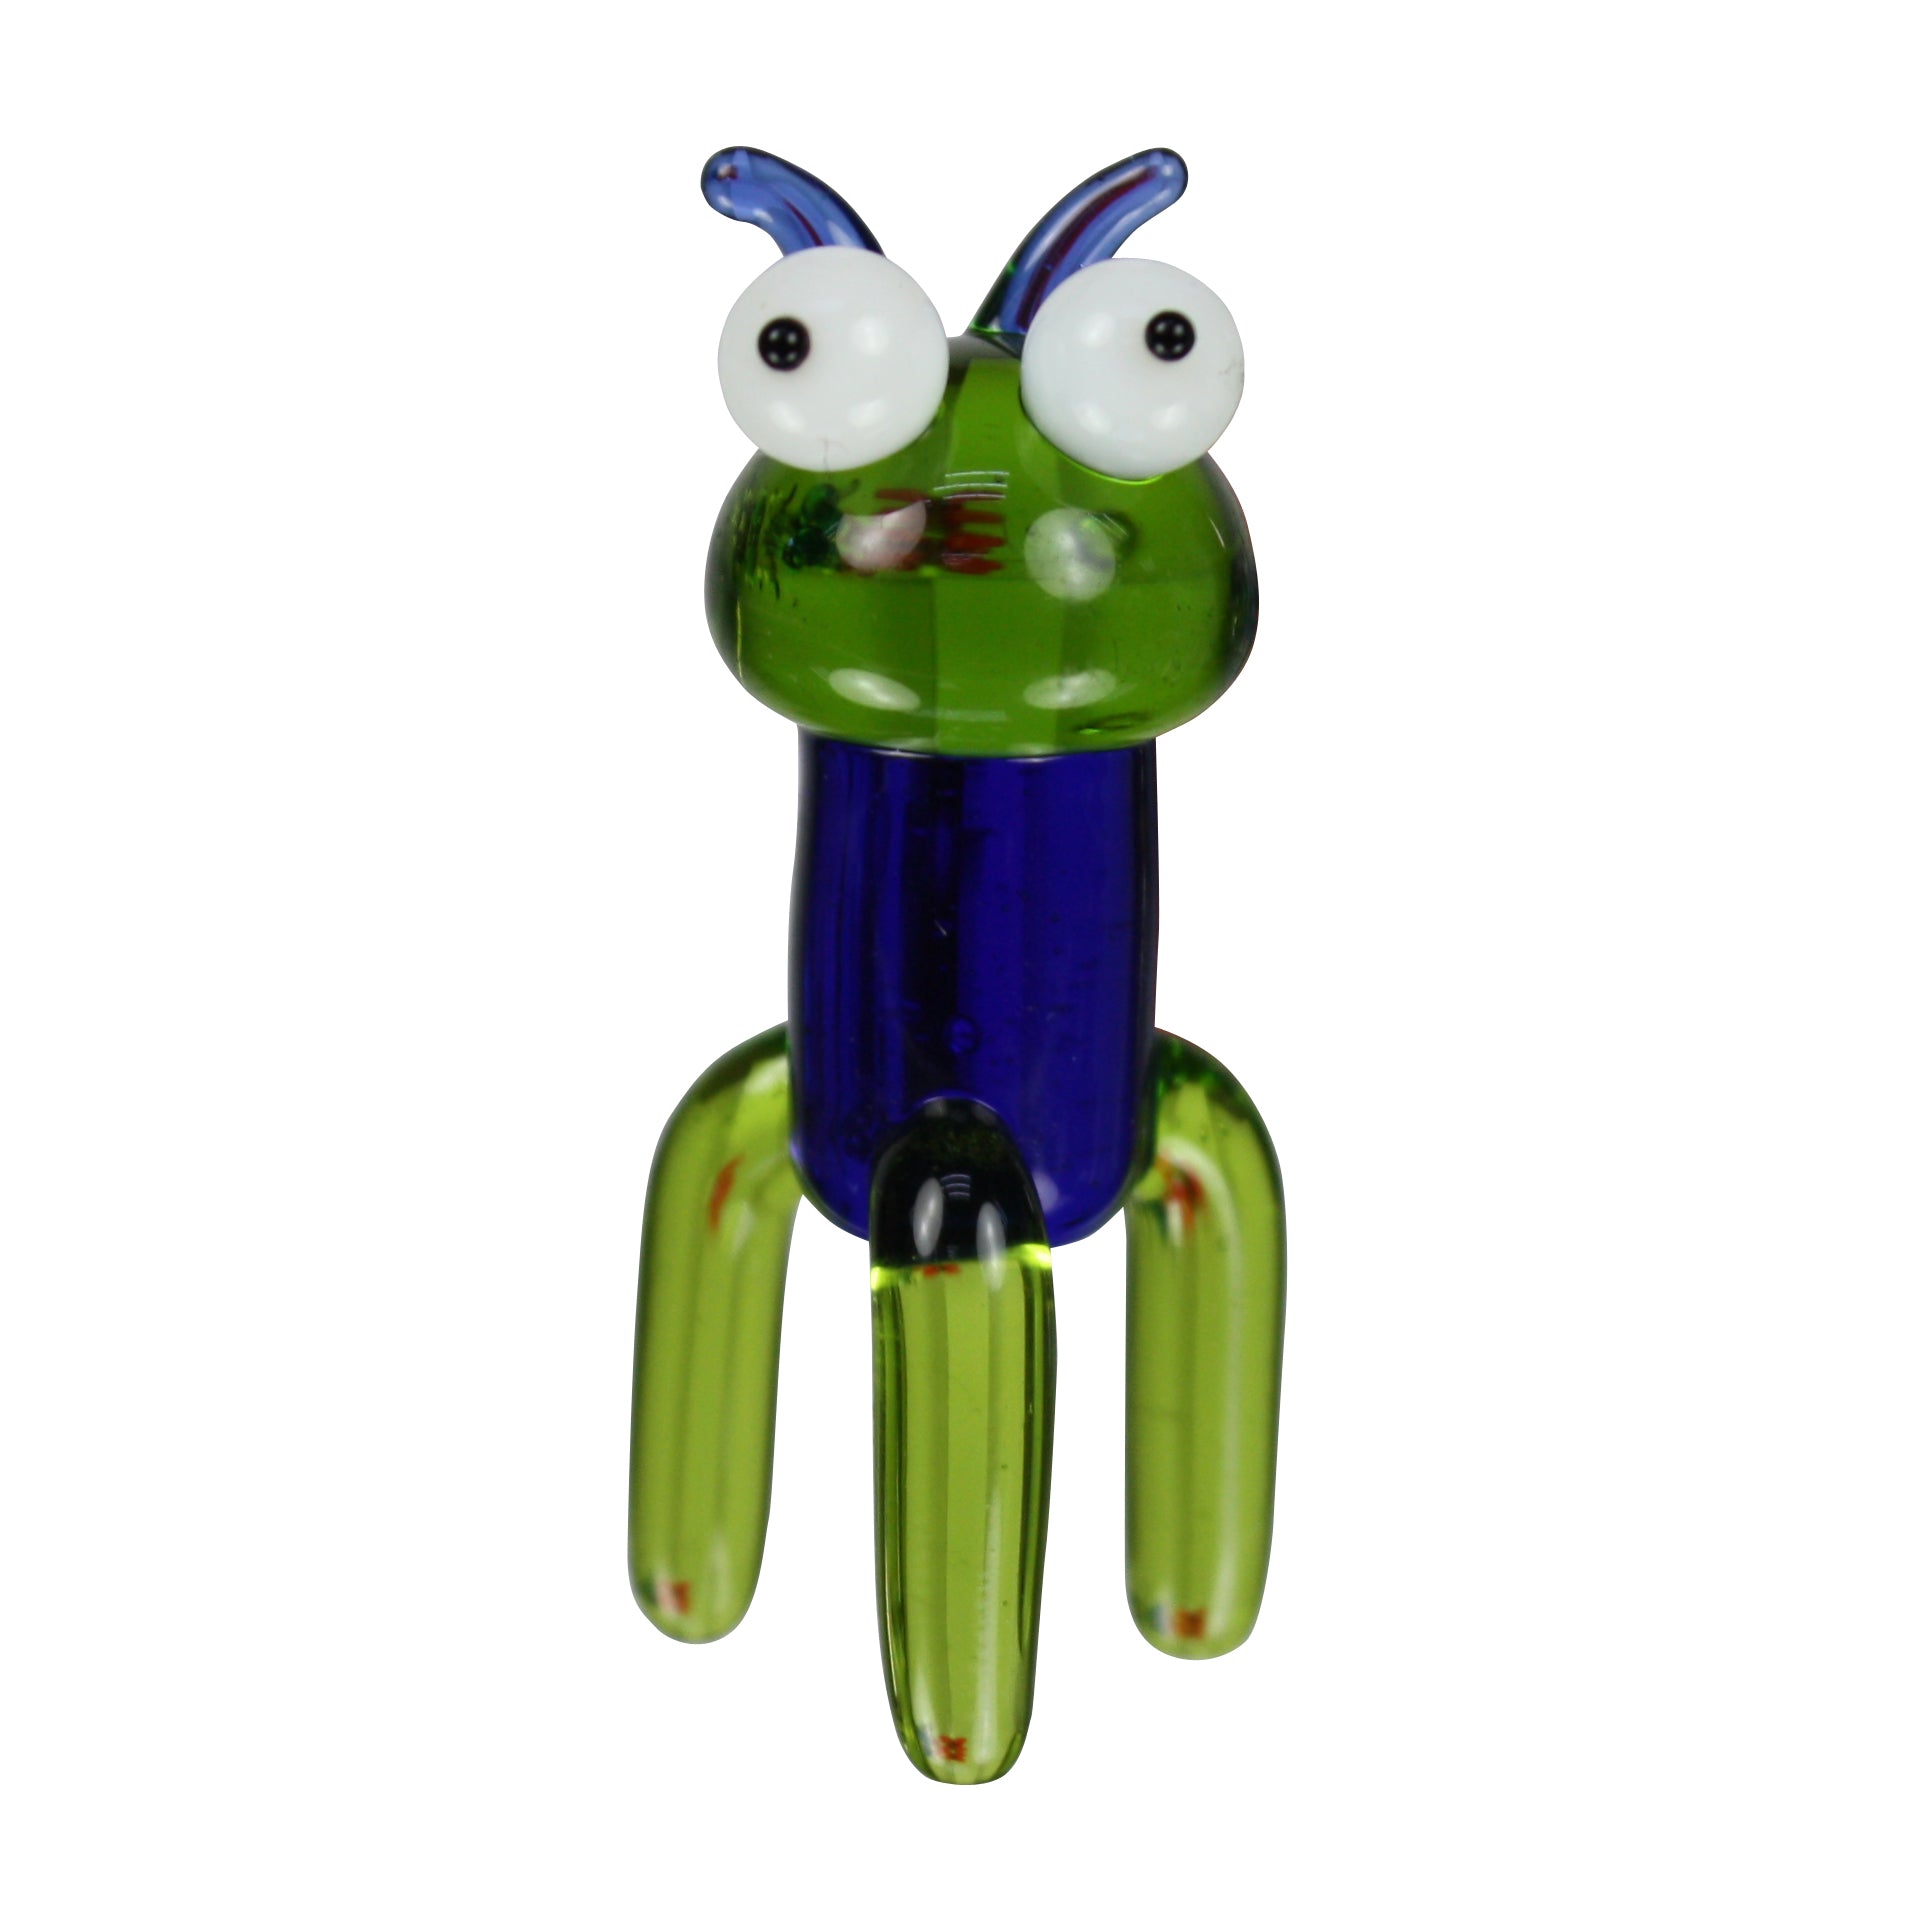 GlassWorld tOObz™ bazOO™ collectible miniature glass figurine Product Image